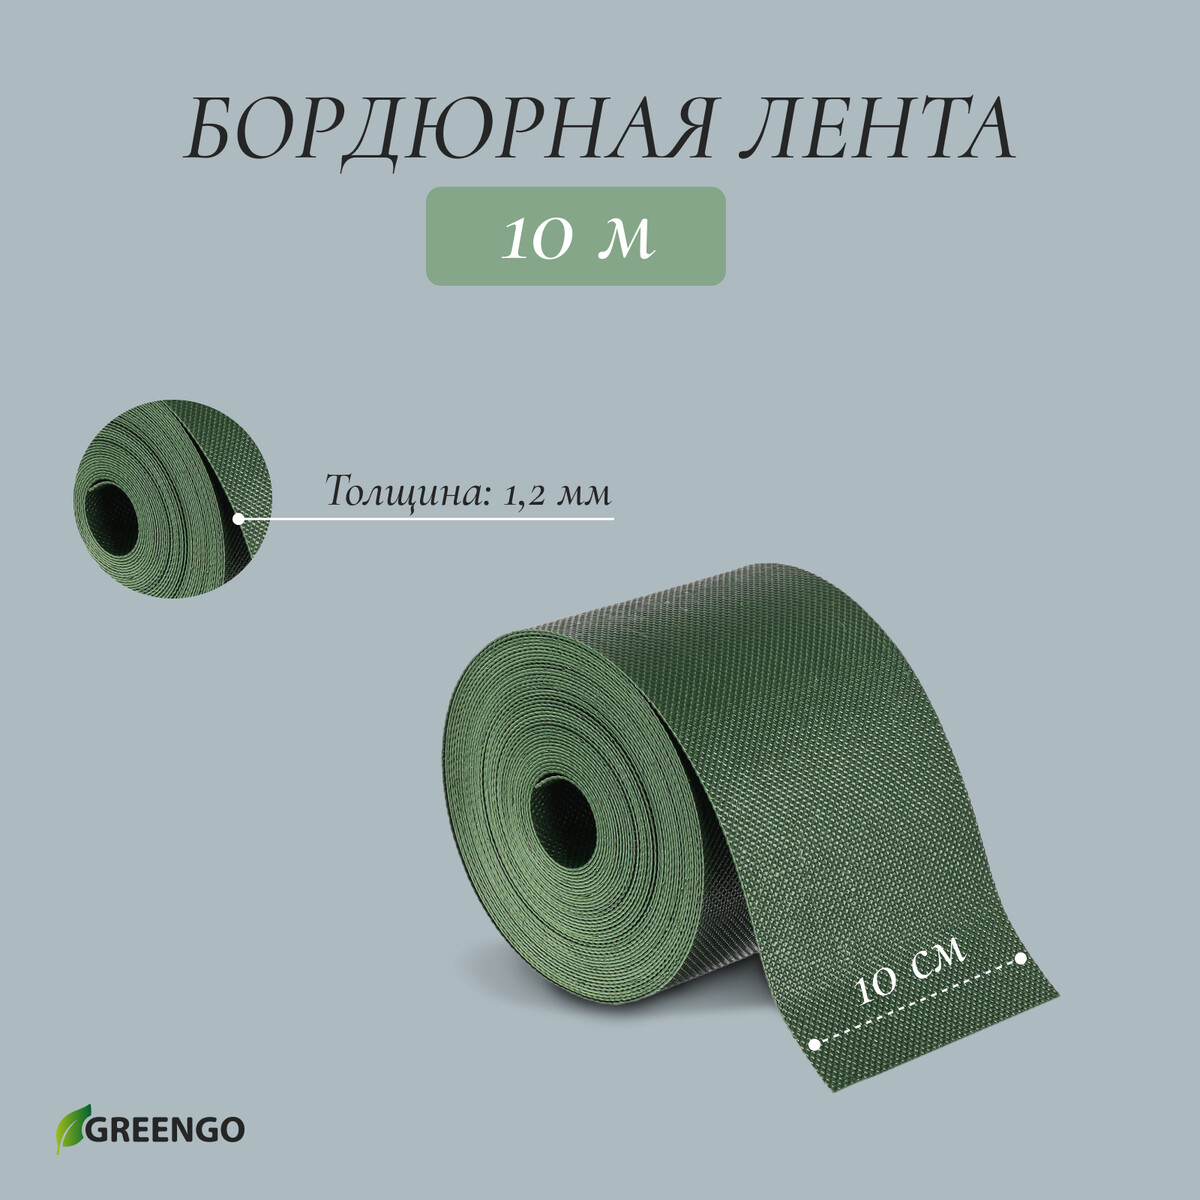 Лента бордюрная, 0.1 × 10 м, толщина 1.2 мм, пластиковая, зеленая, greengo лента бордюрная 0 15 × 9 м толщина 1 2 мм пластиковая фигурная красная